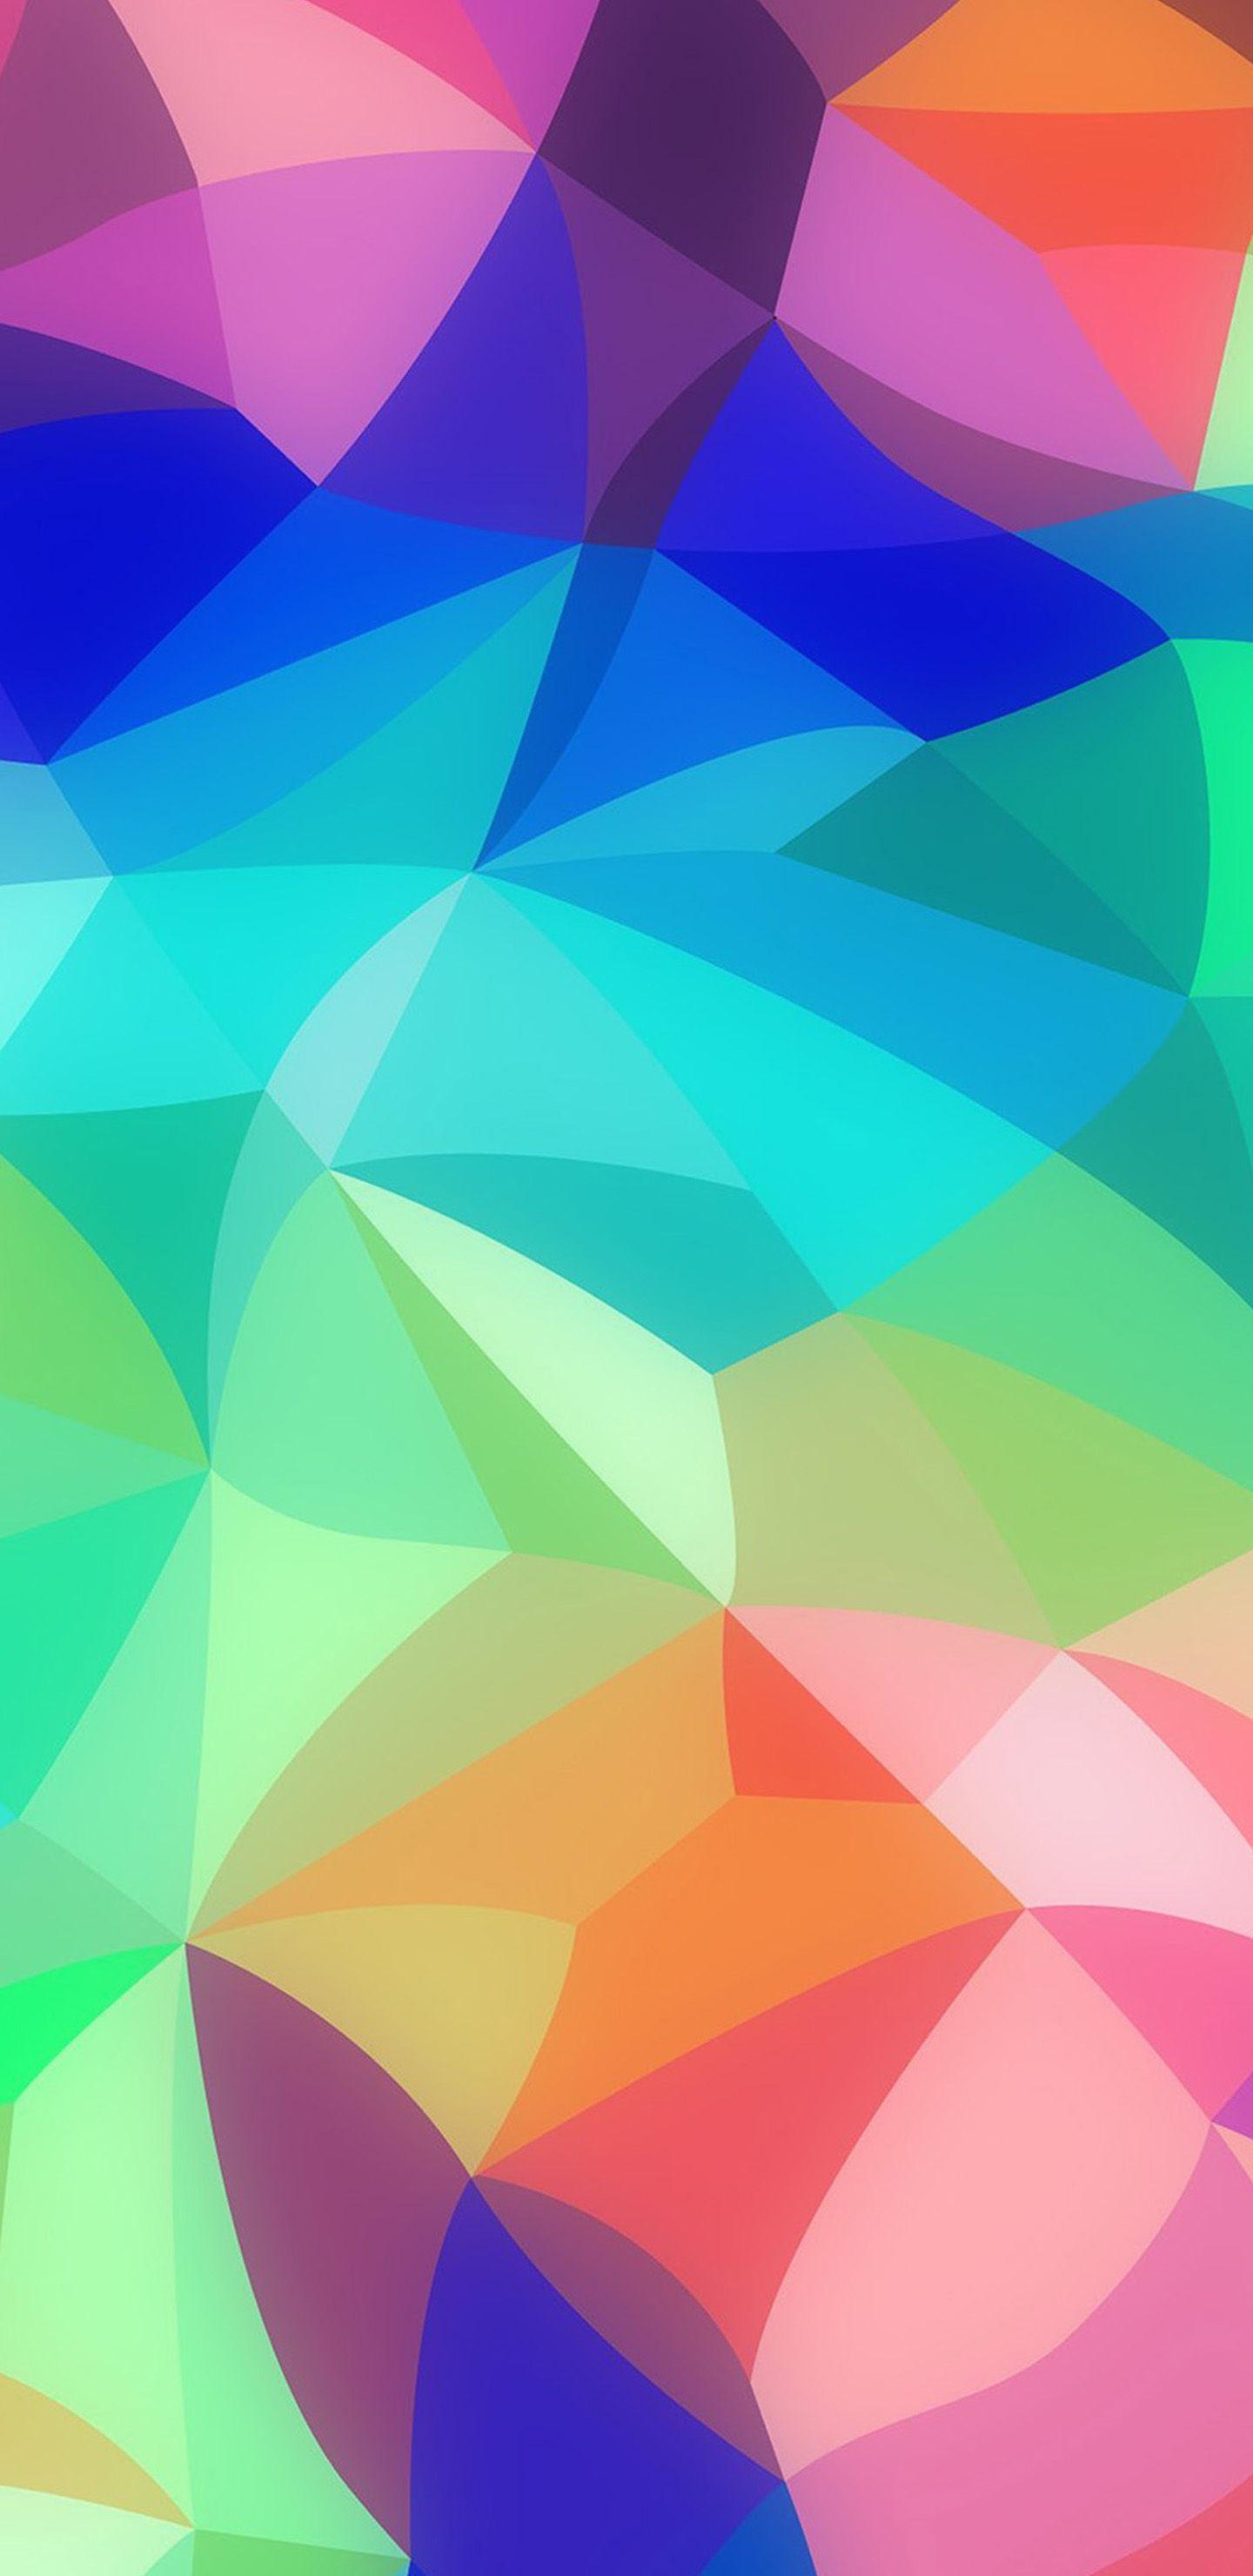 vk40 rainbow abstract colors pastel hazy design Samsung Galaxy Note